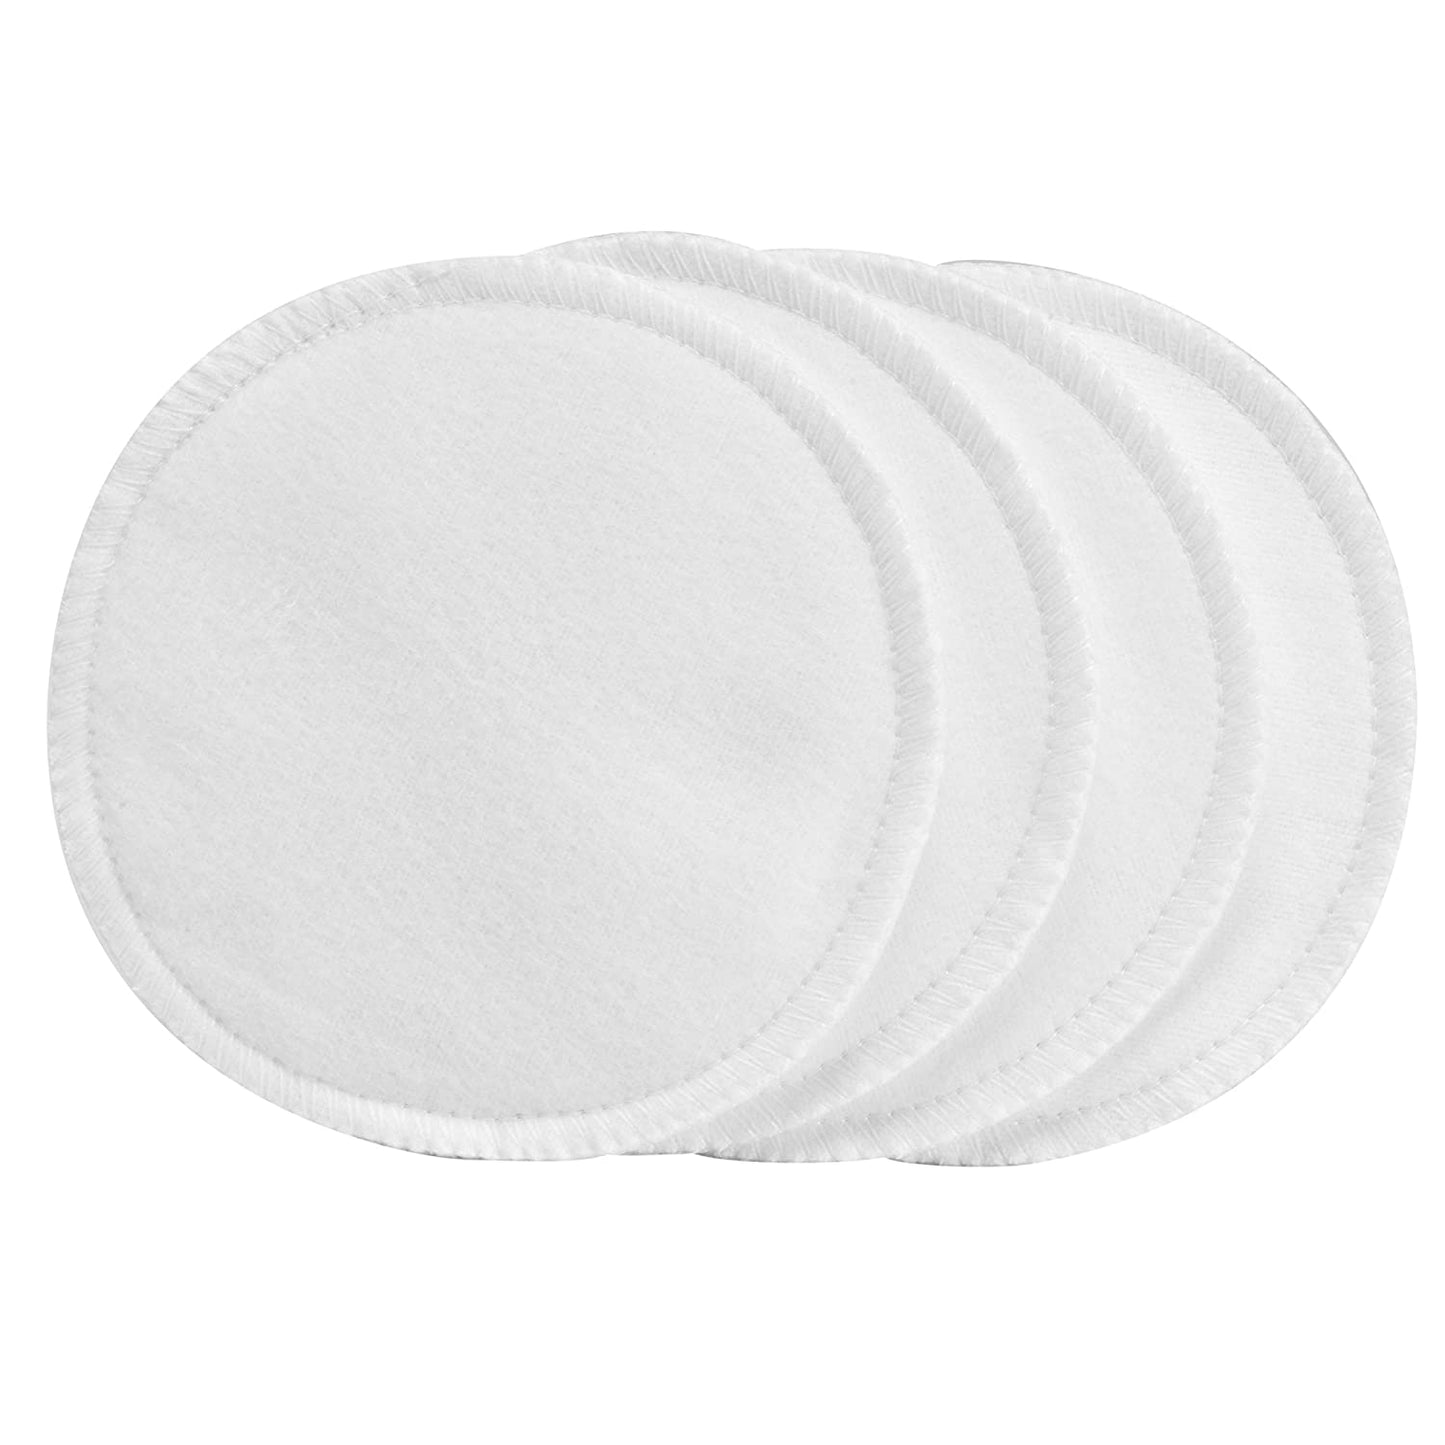 Discos absorbentes lavables para pecho materno 4 unid Dr. Brown's